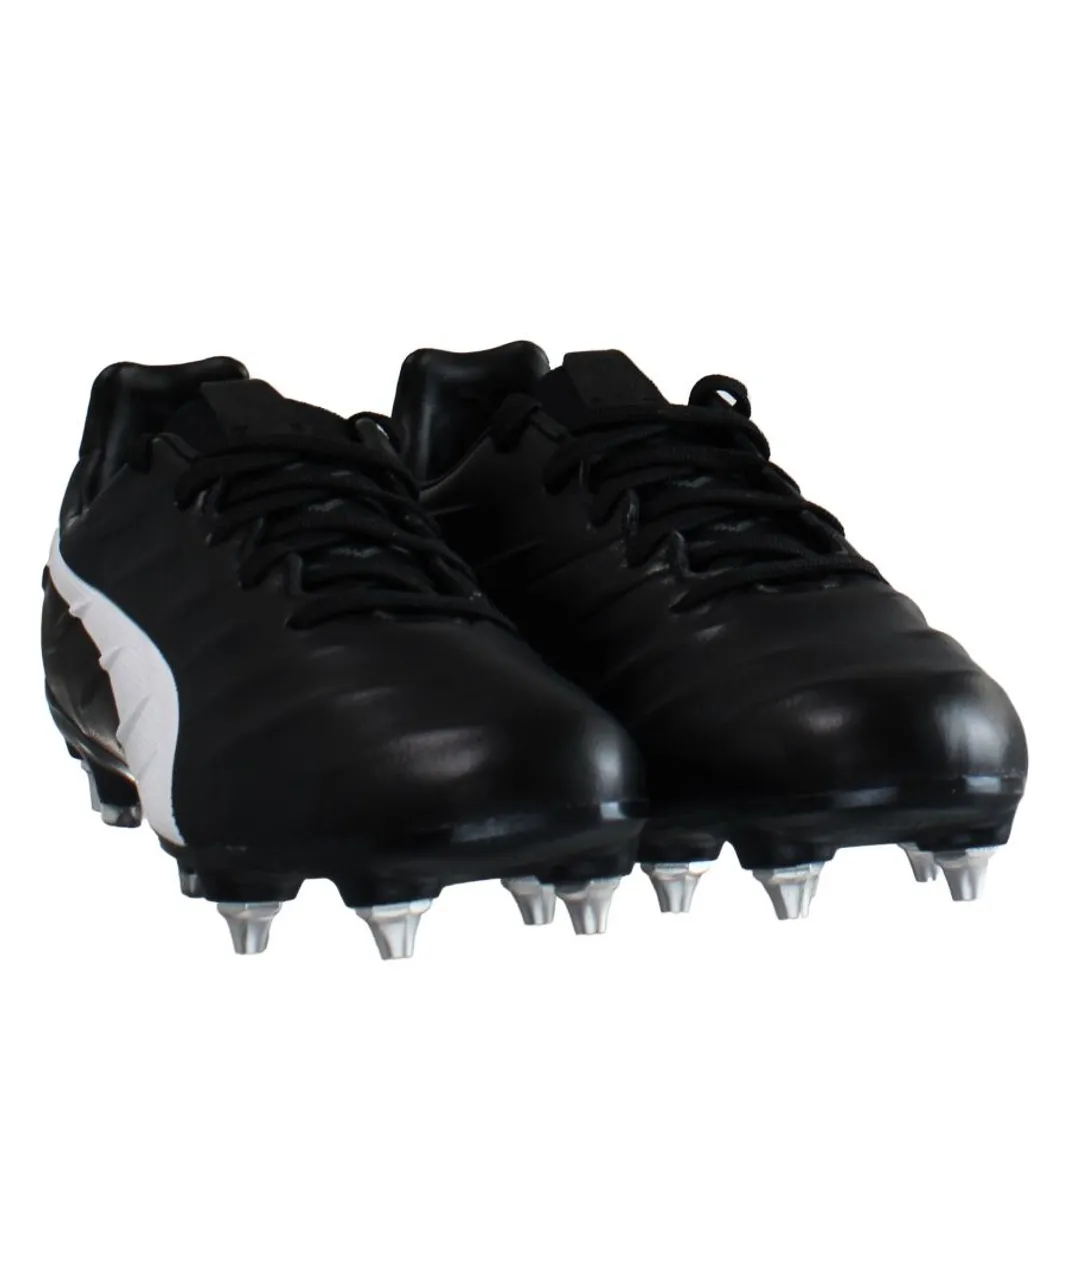 Puma King Platinum 21 MxSG Black Mens Football Boots Leather (archived)